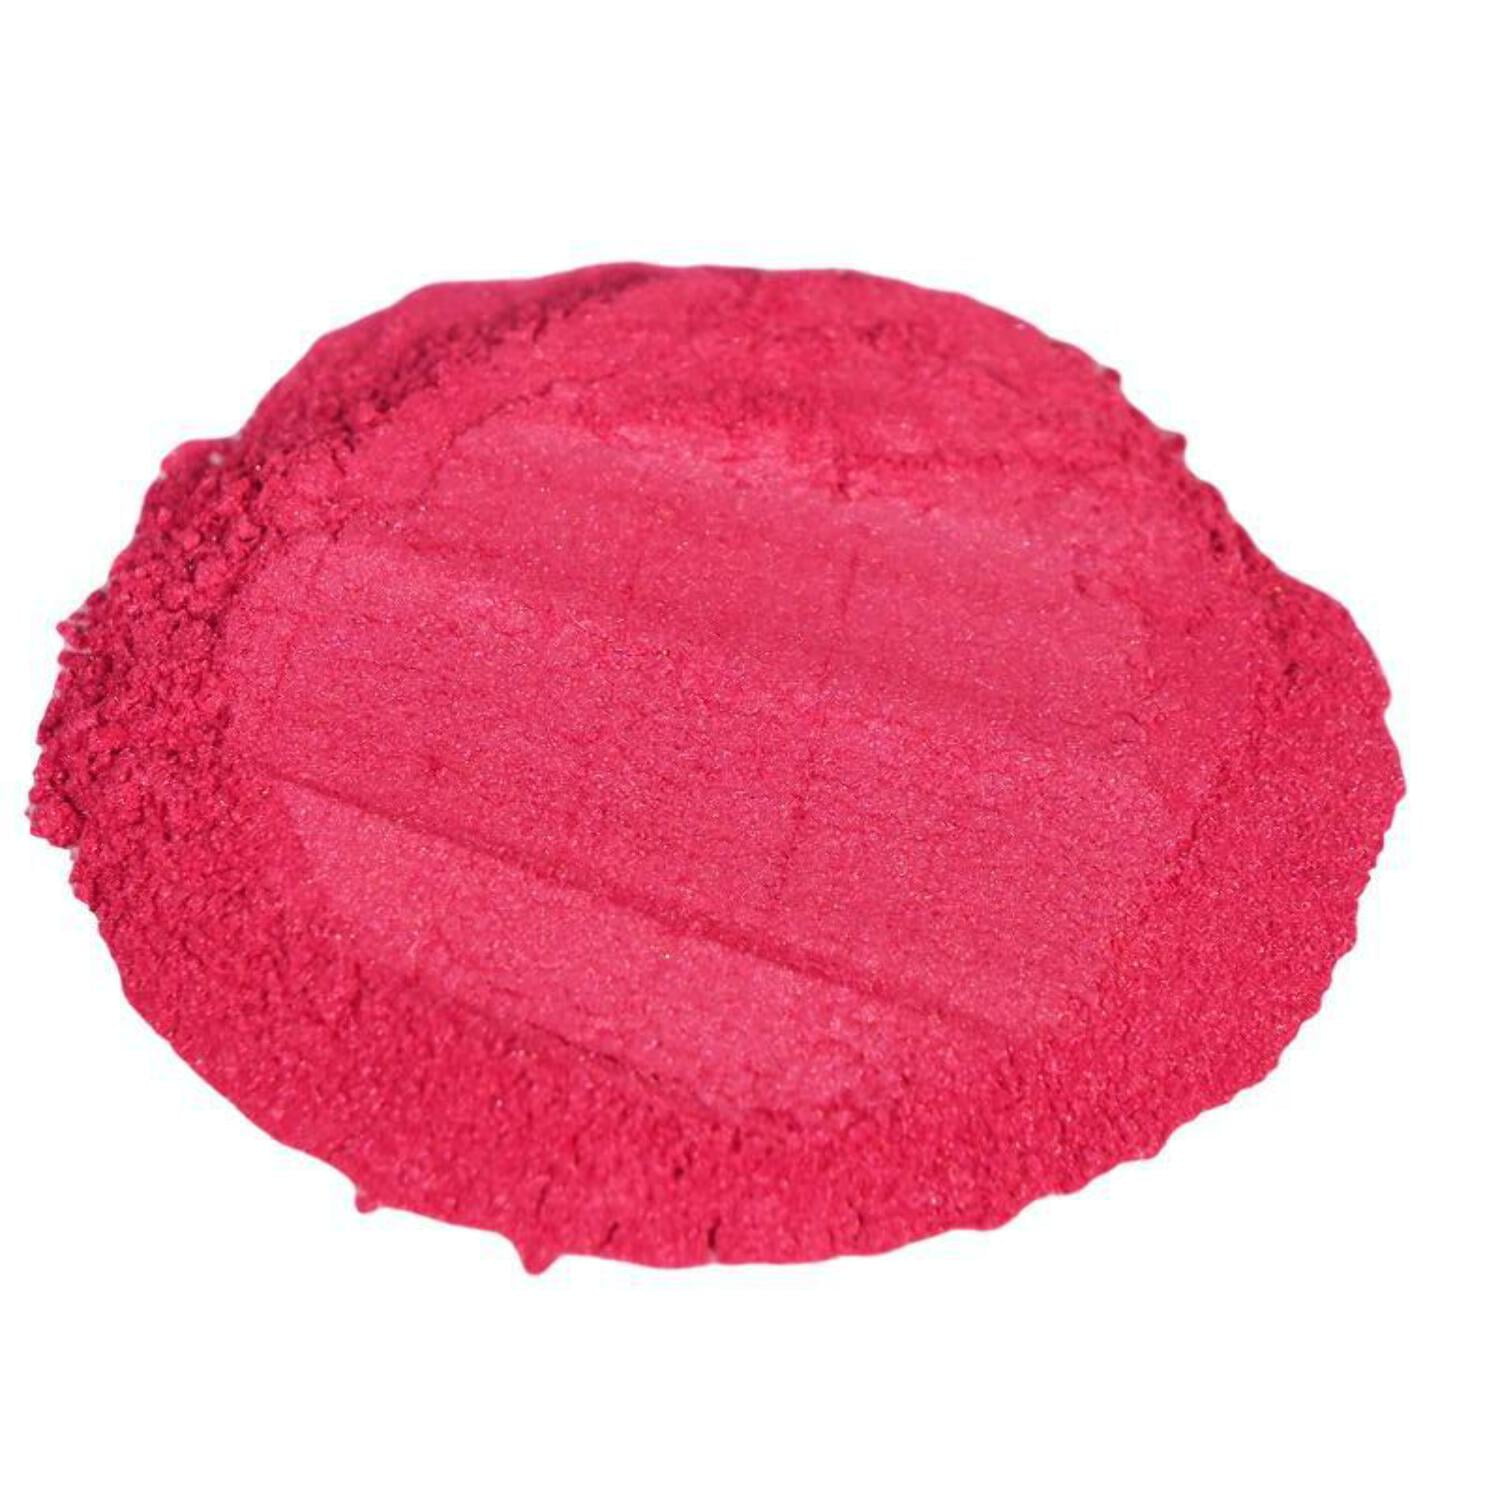 Purple Mountain Metallic Powder (PolyColor) Mica Powder for Epoxy